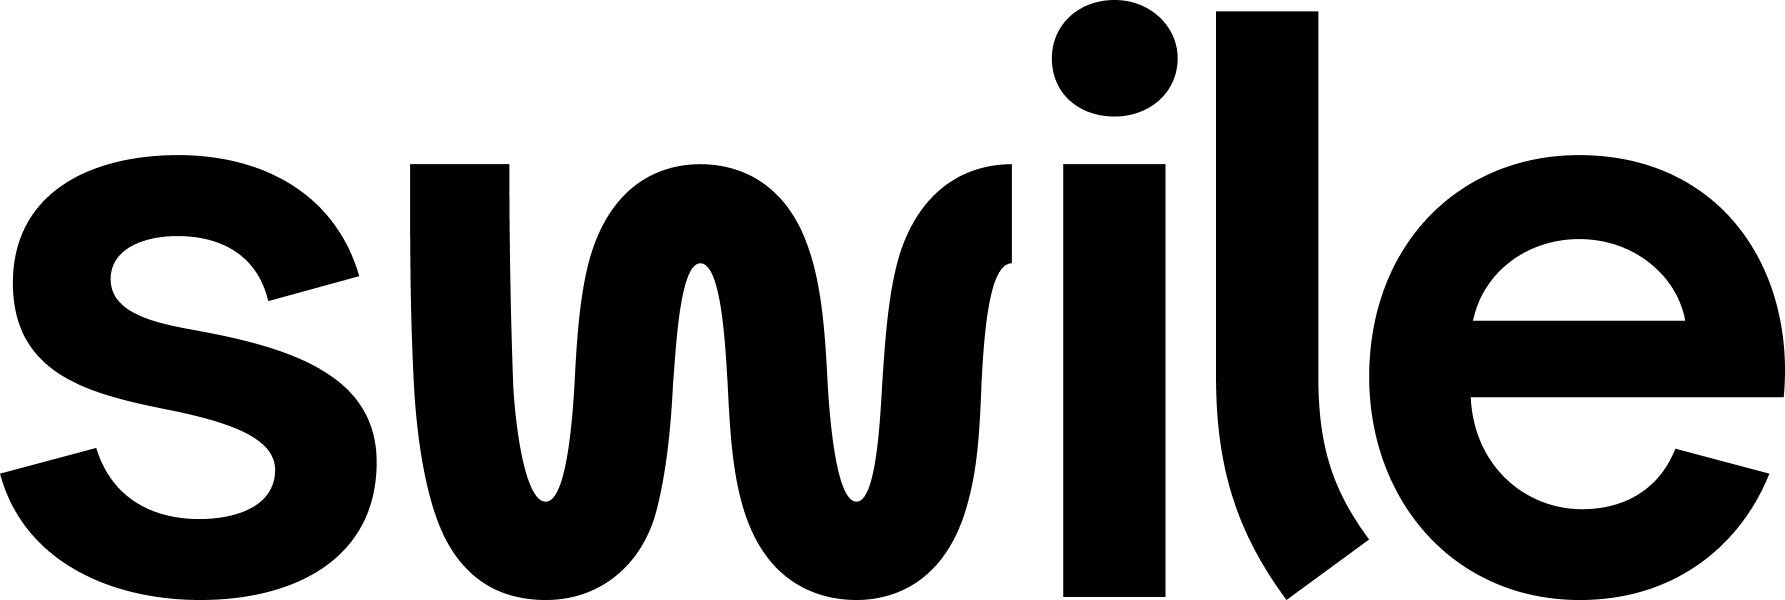 Swile, logo